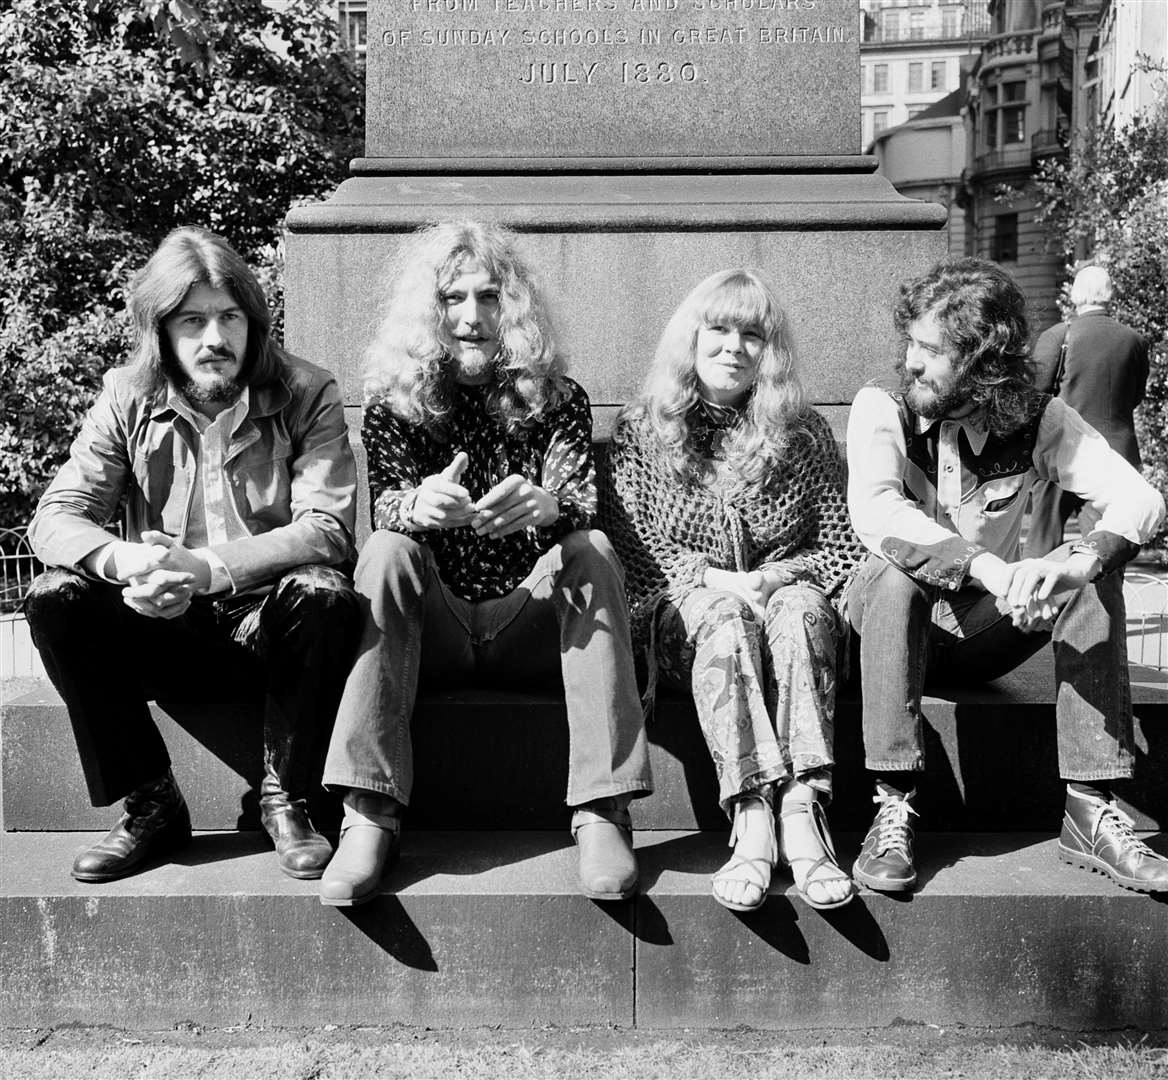 Members of Led Zeppelin John Bonham, Robert Plant and Jimmy Page, alongside singer-songwriter Sandy Denny following the Melody Maker Pop Poll in London in 1970 (PA)